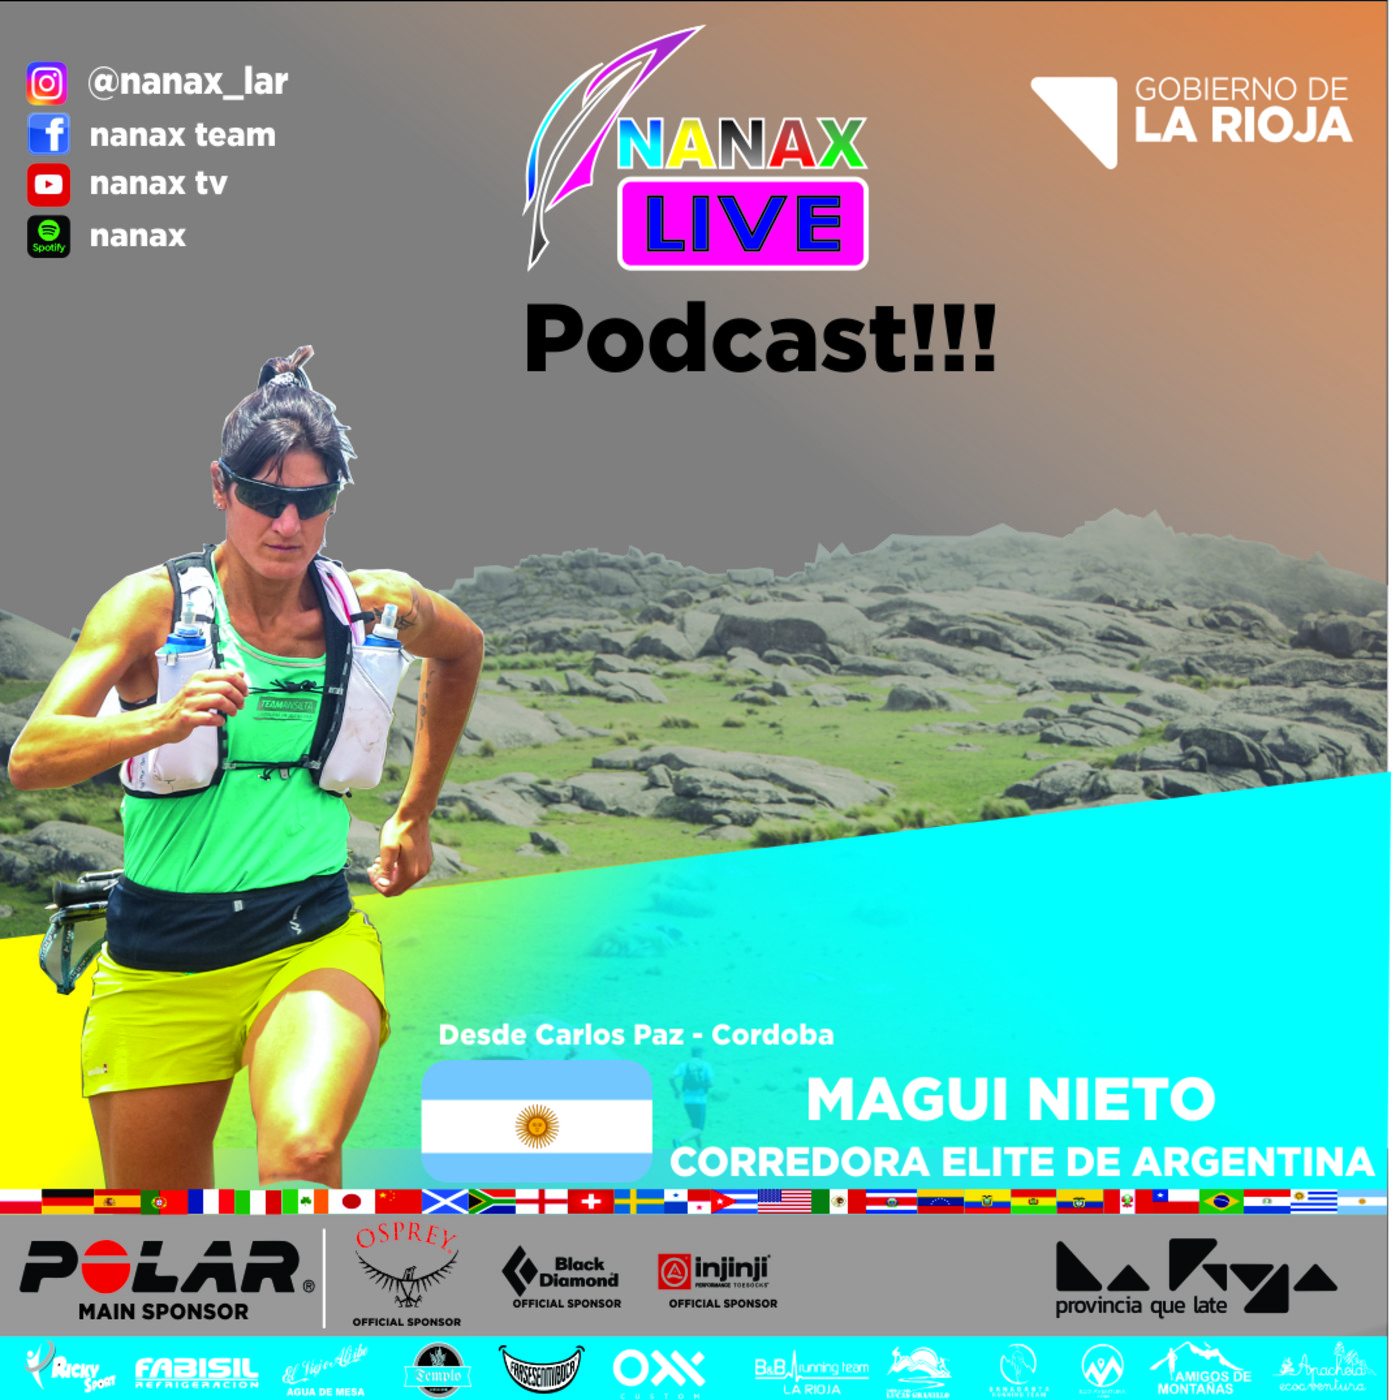 Nanax Live TV - Magui Nieto